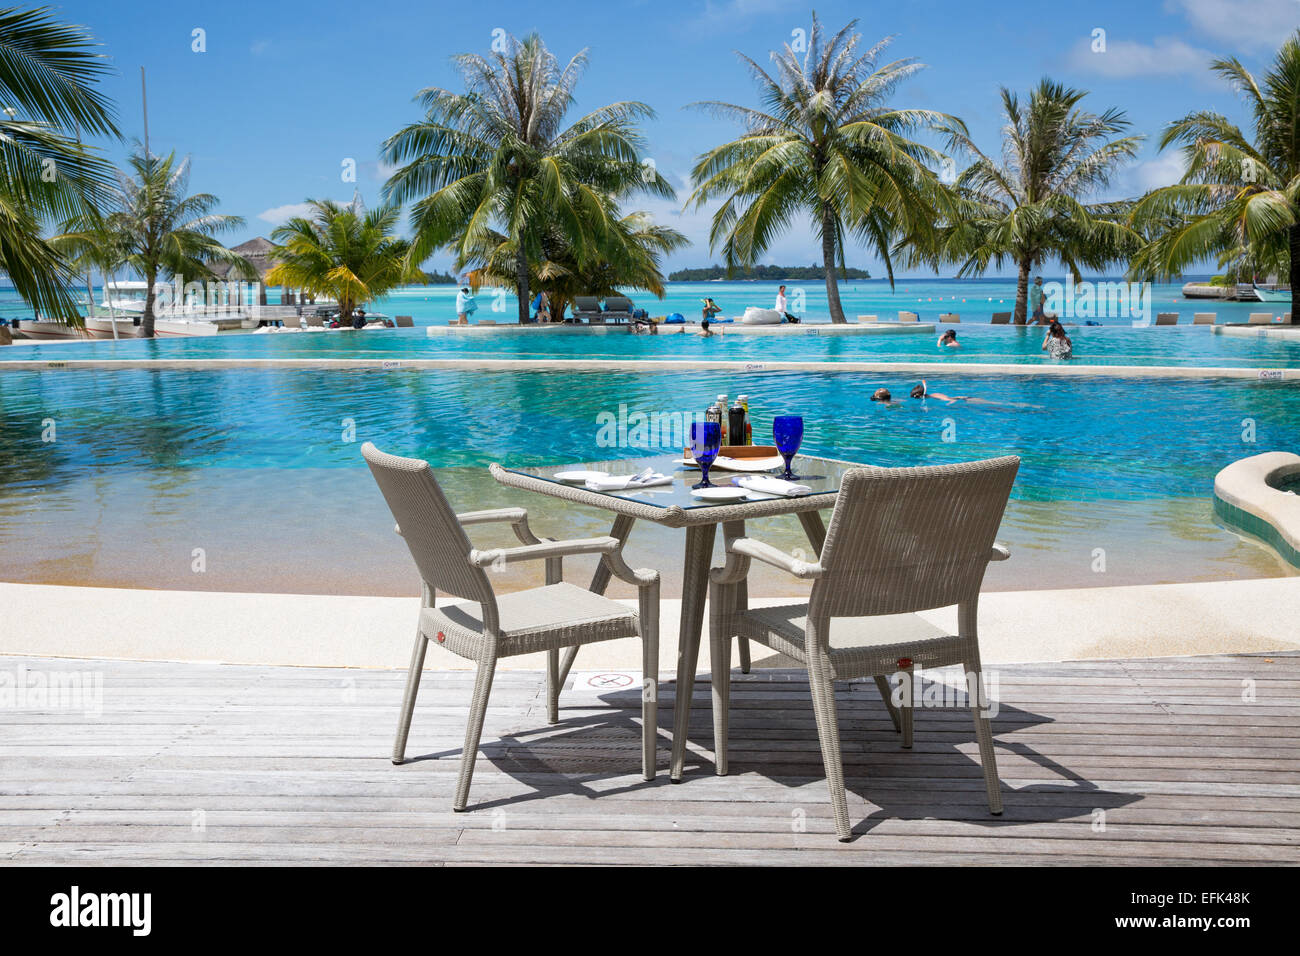 Pool and poolside dining by the sea at Kandooma island resort Maldives Stock Photo